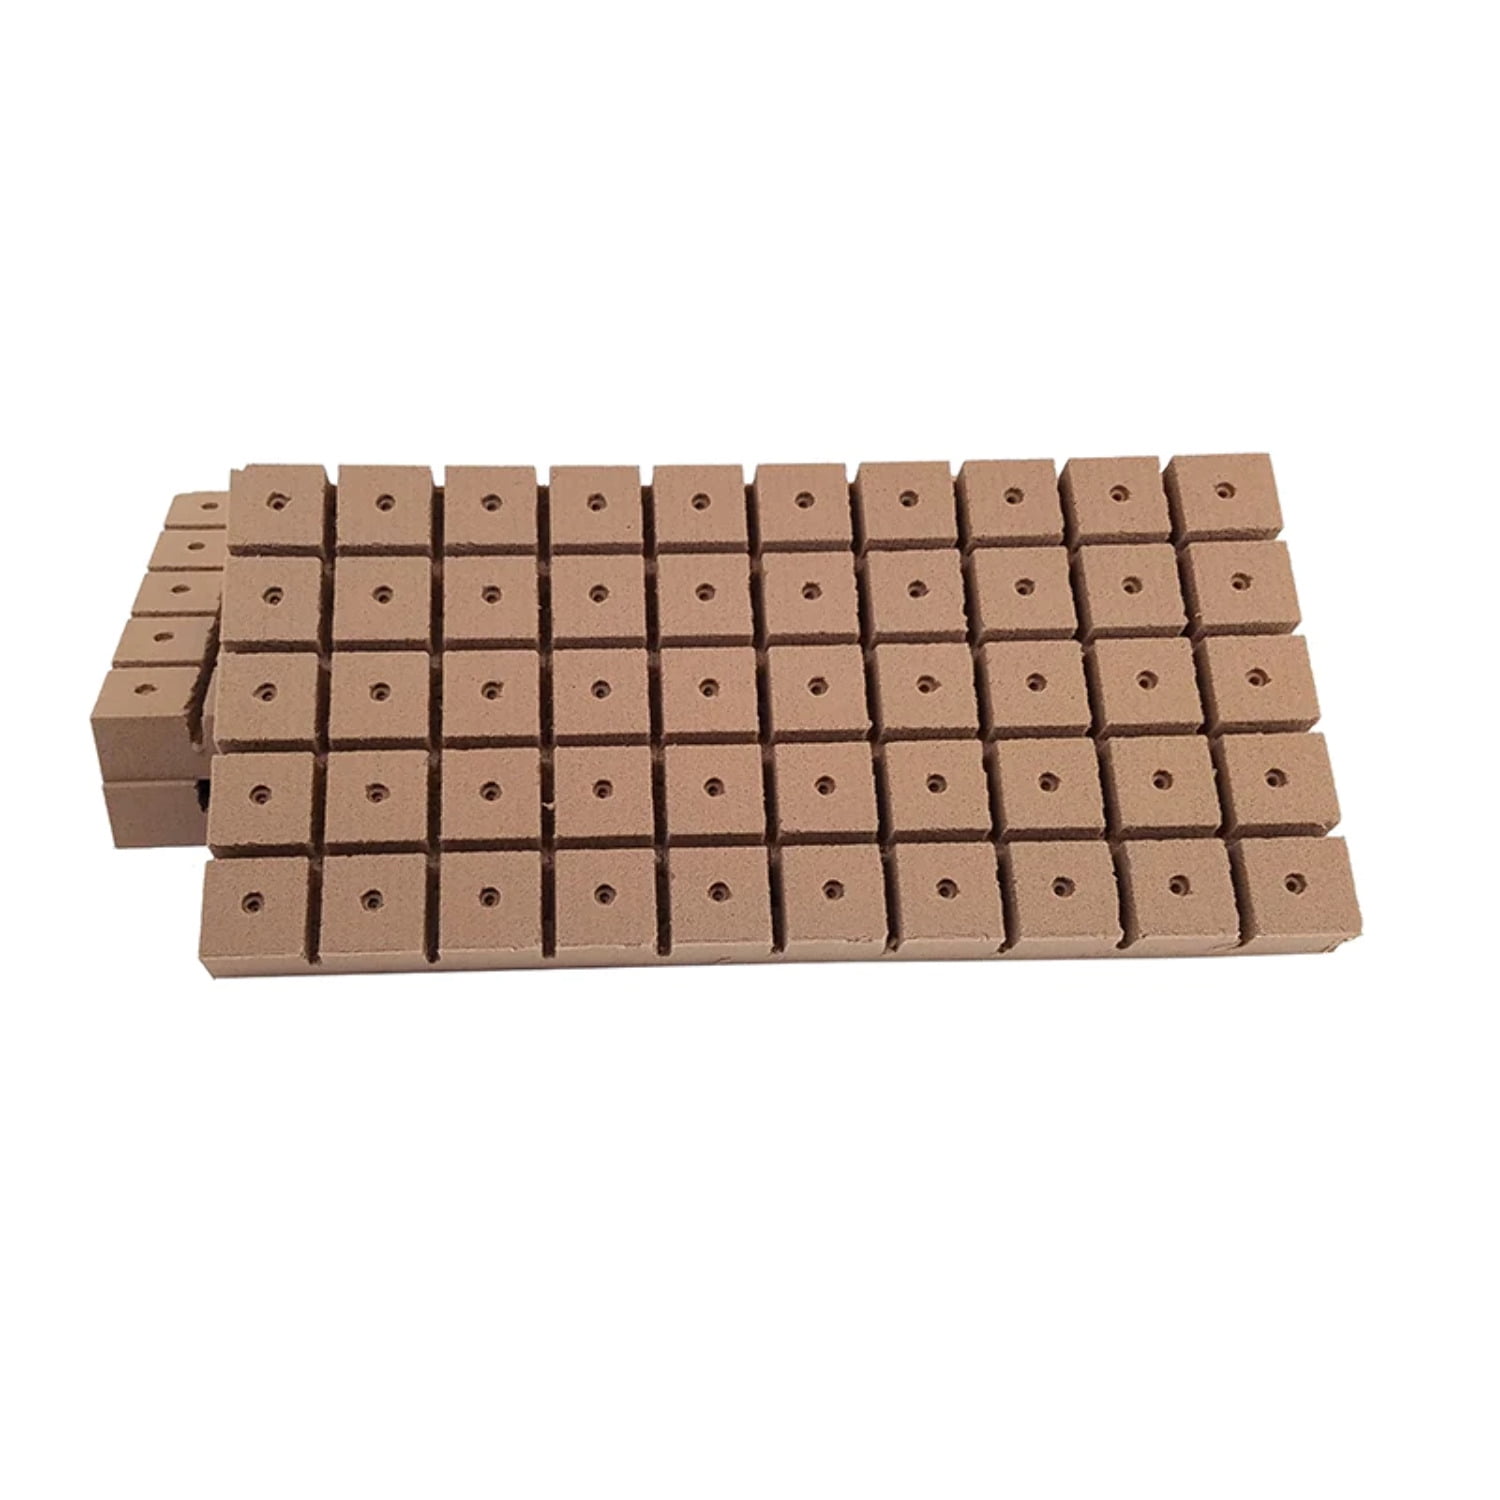 Grodan Rockwool Cubes (1. 5 Inches) 49 Cubes